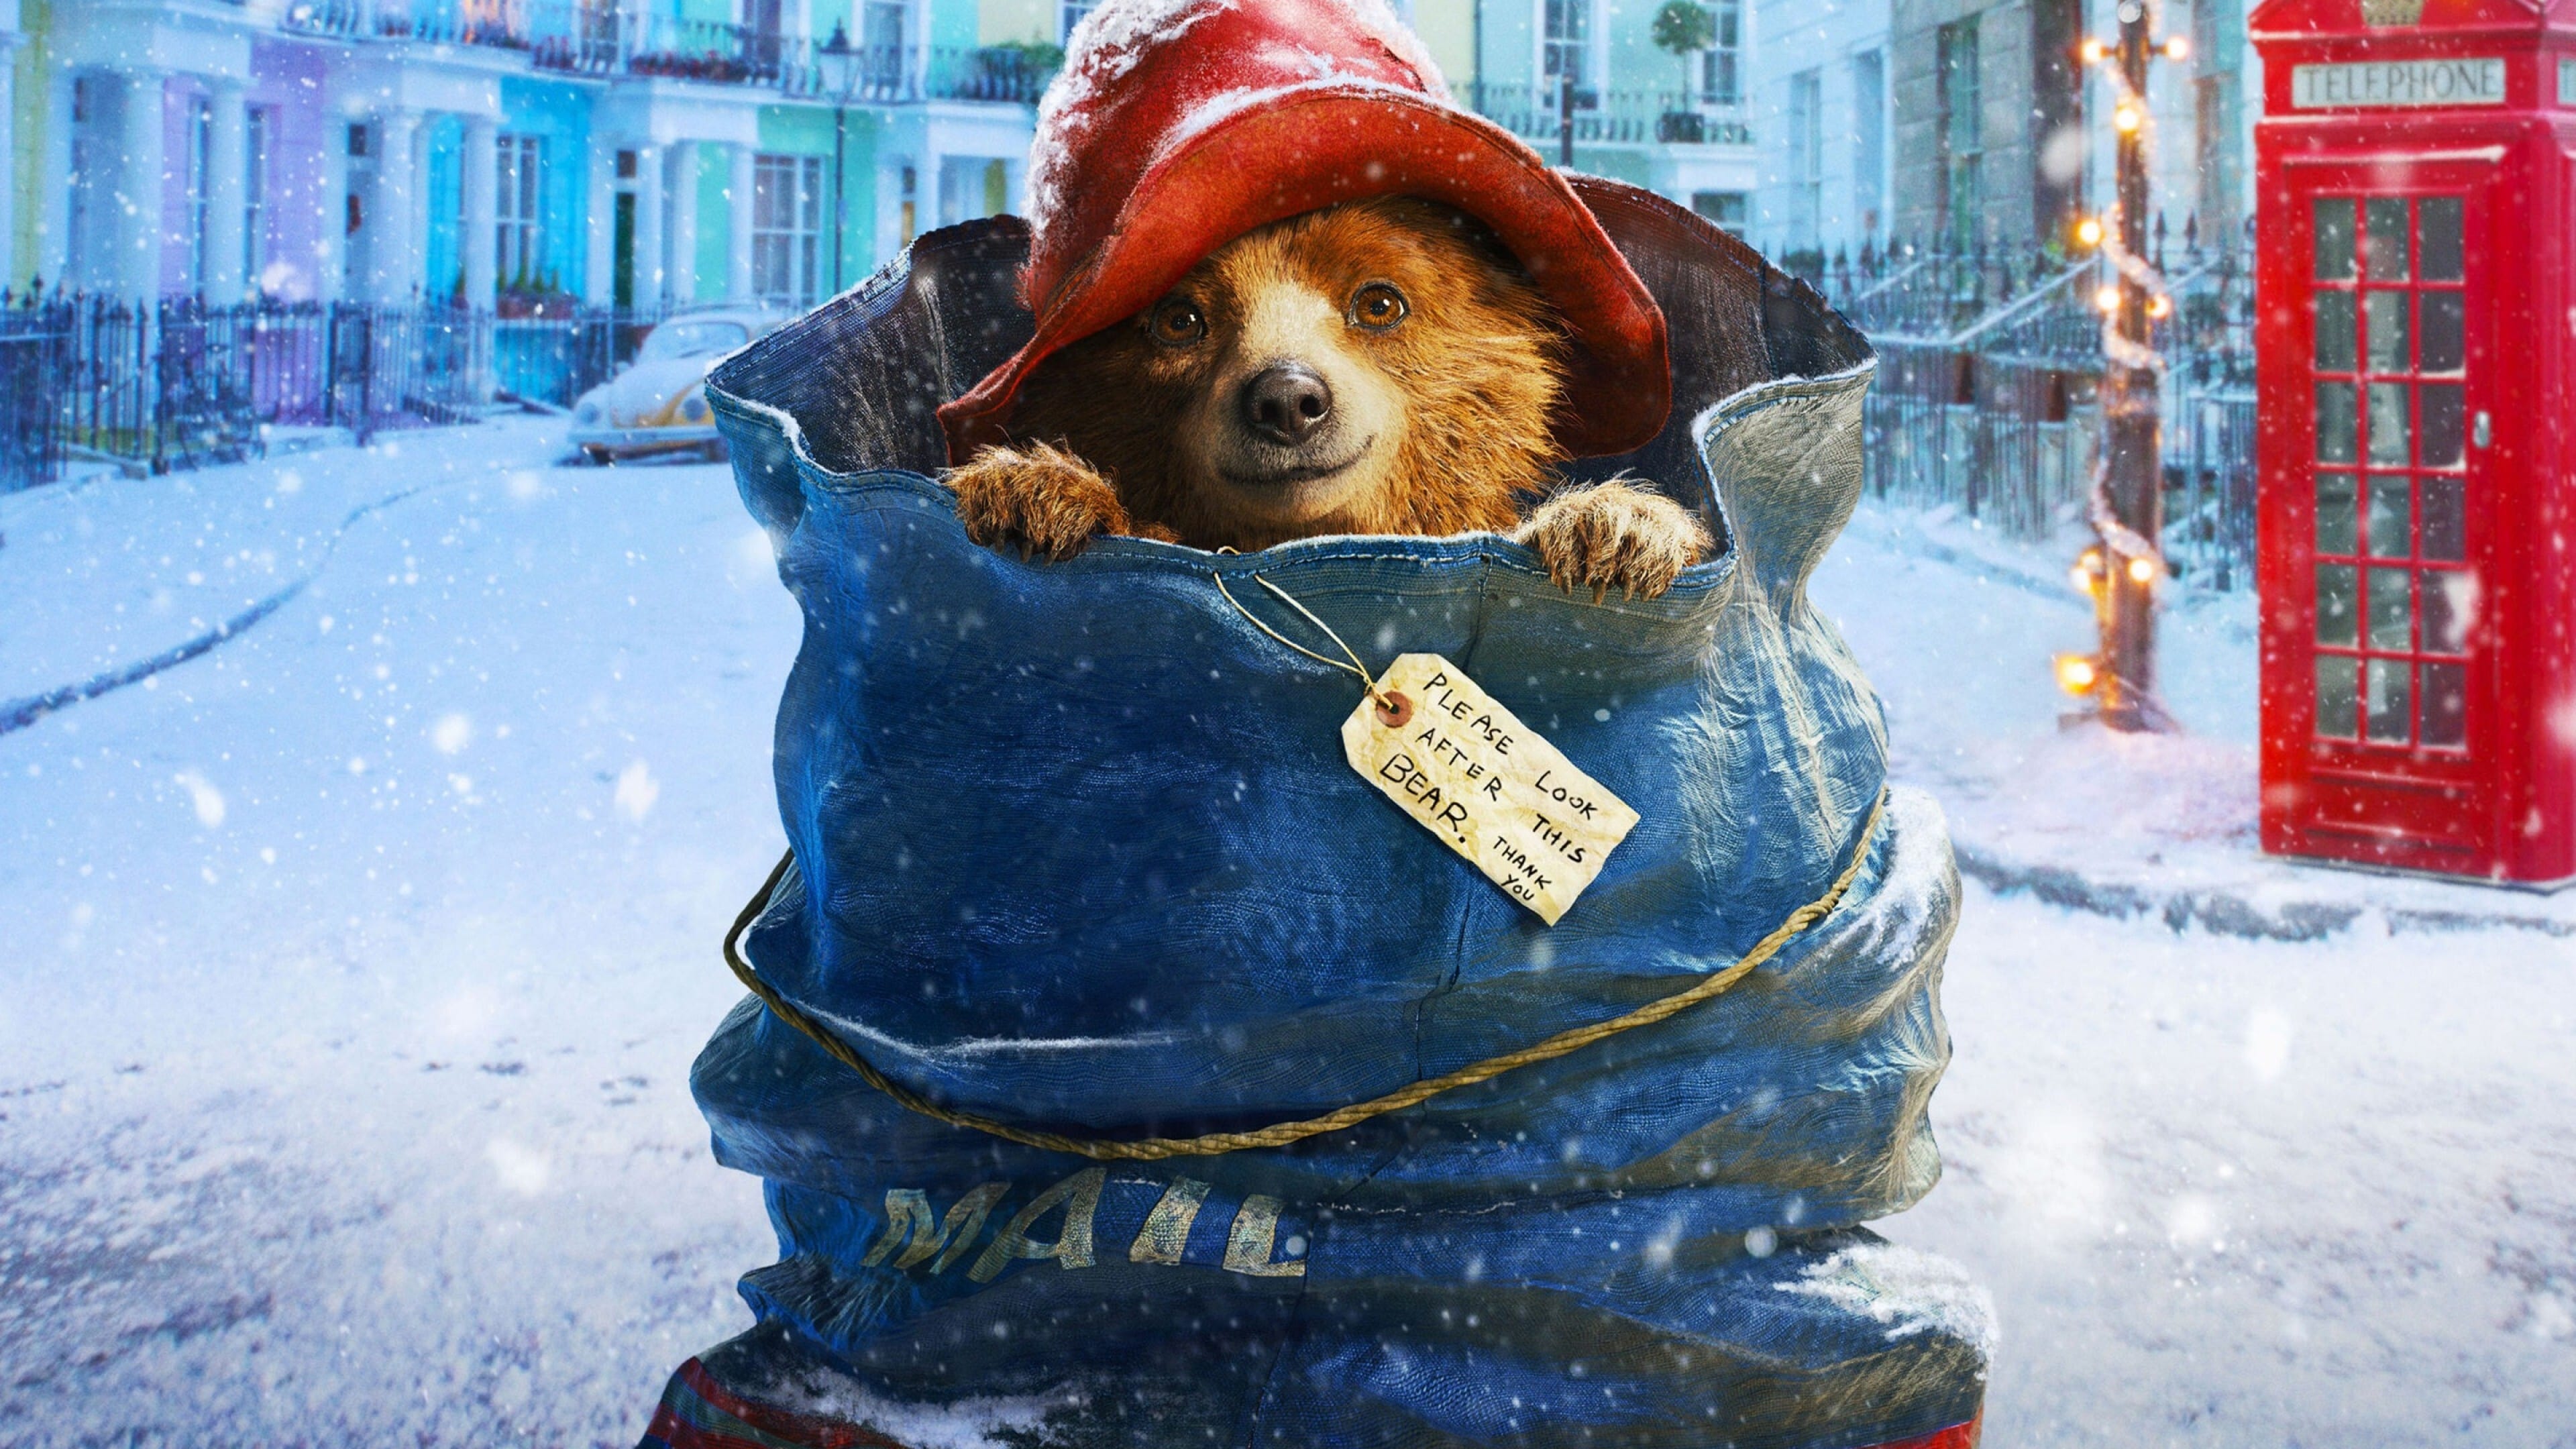 Poster Phim Gấu Paddington (Paddington)